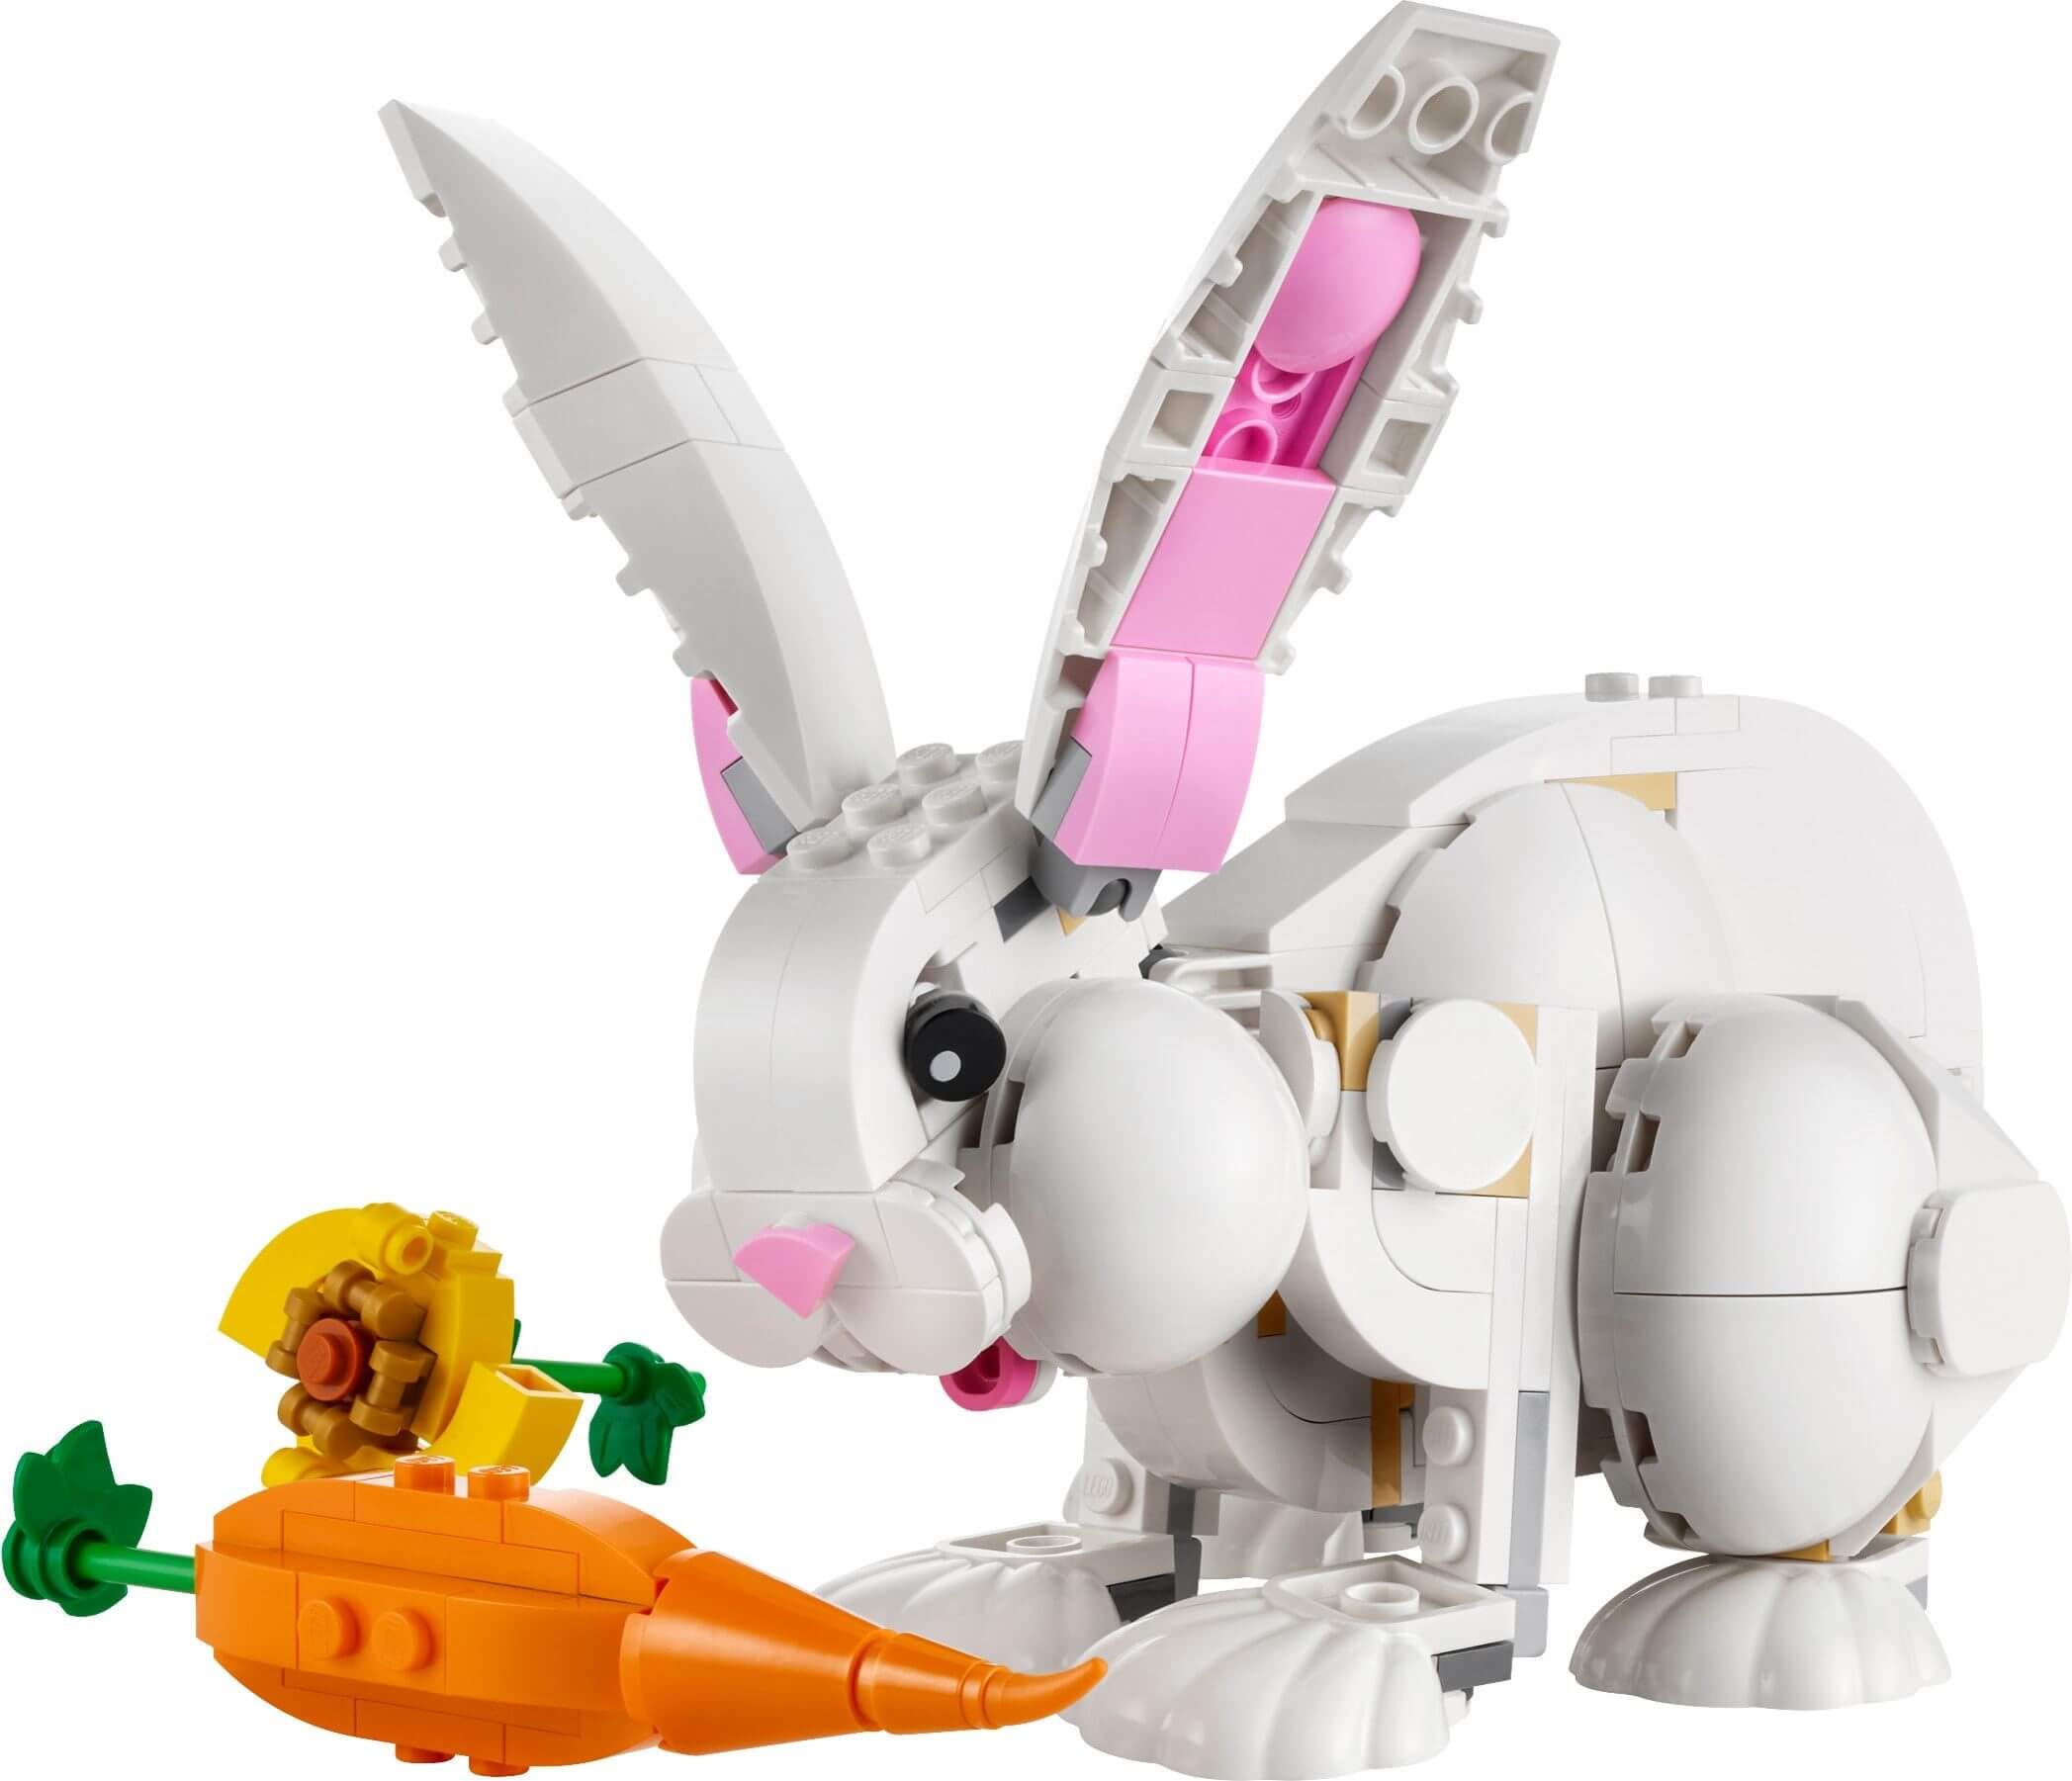 LEGO® Creator White Rabbit 258 Piece Building Kit (31133)